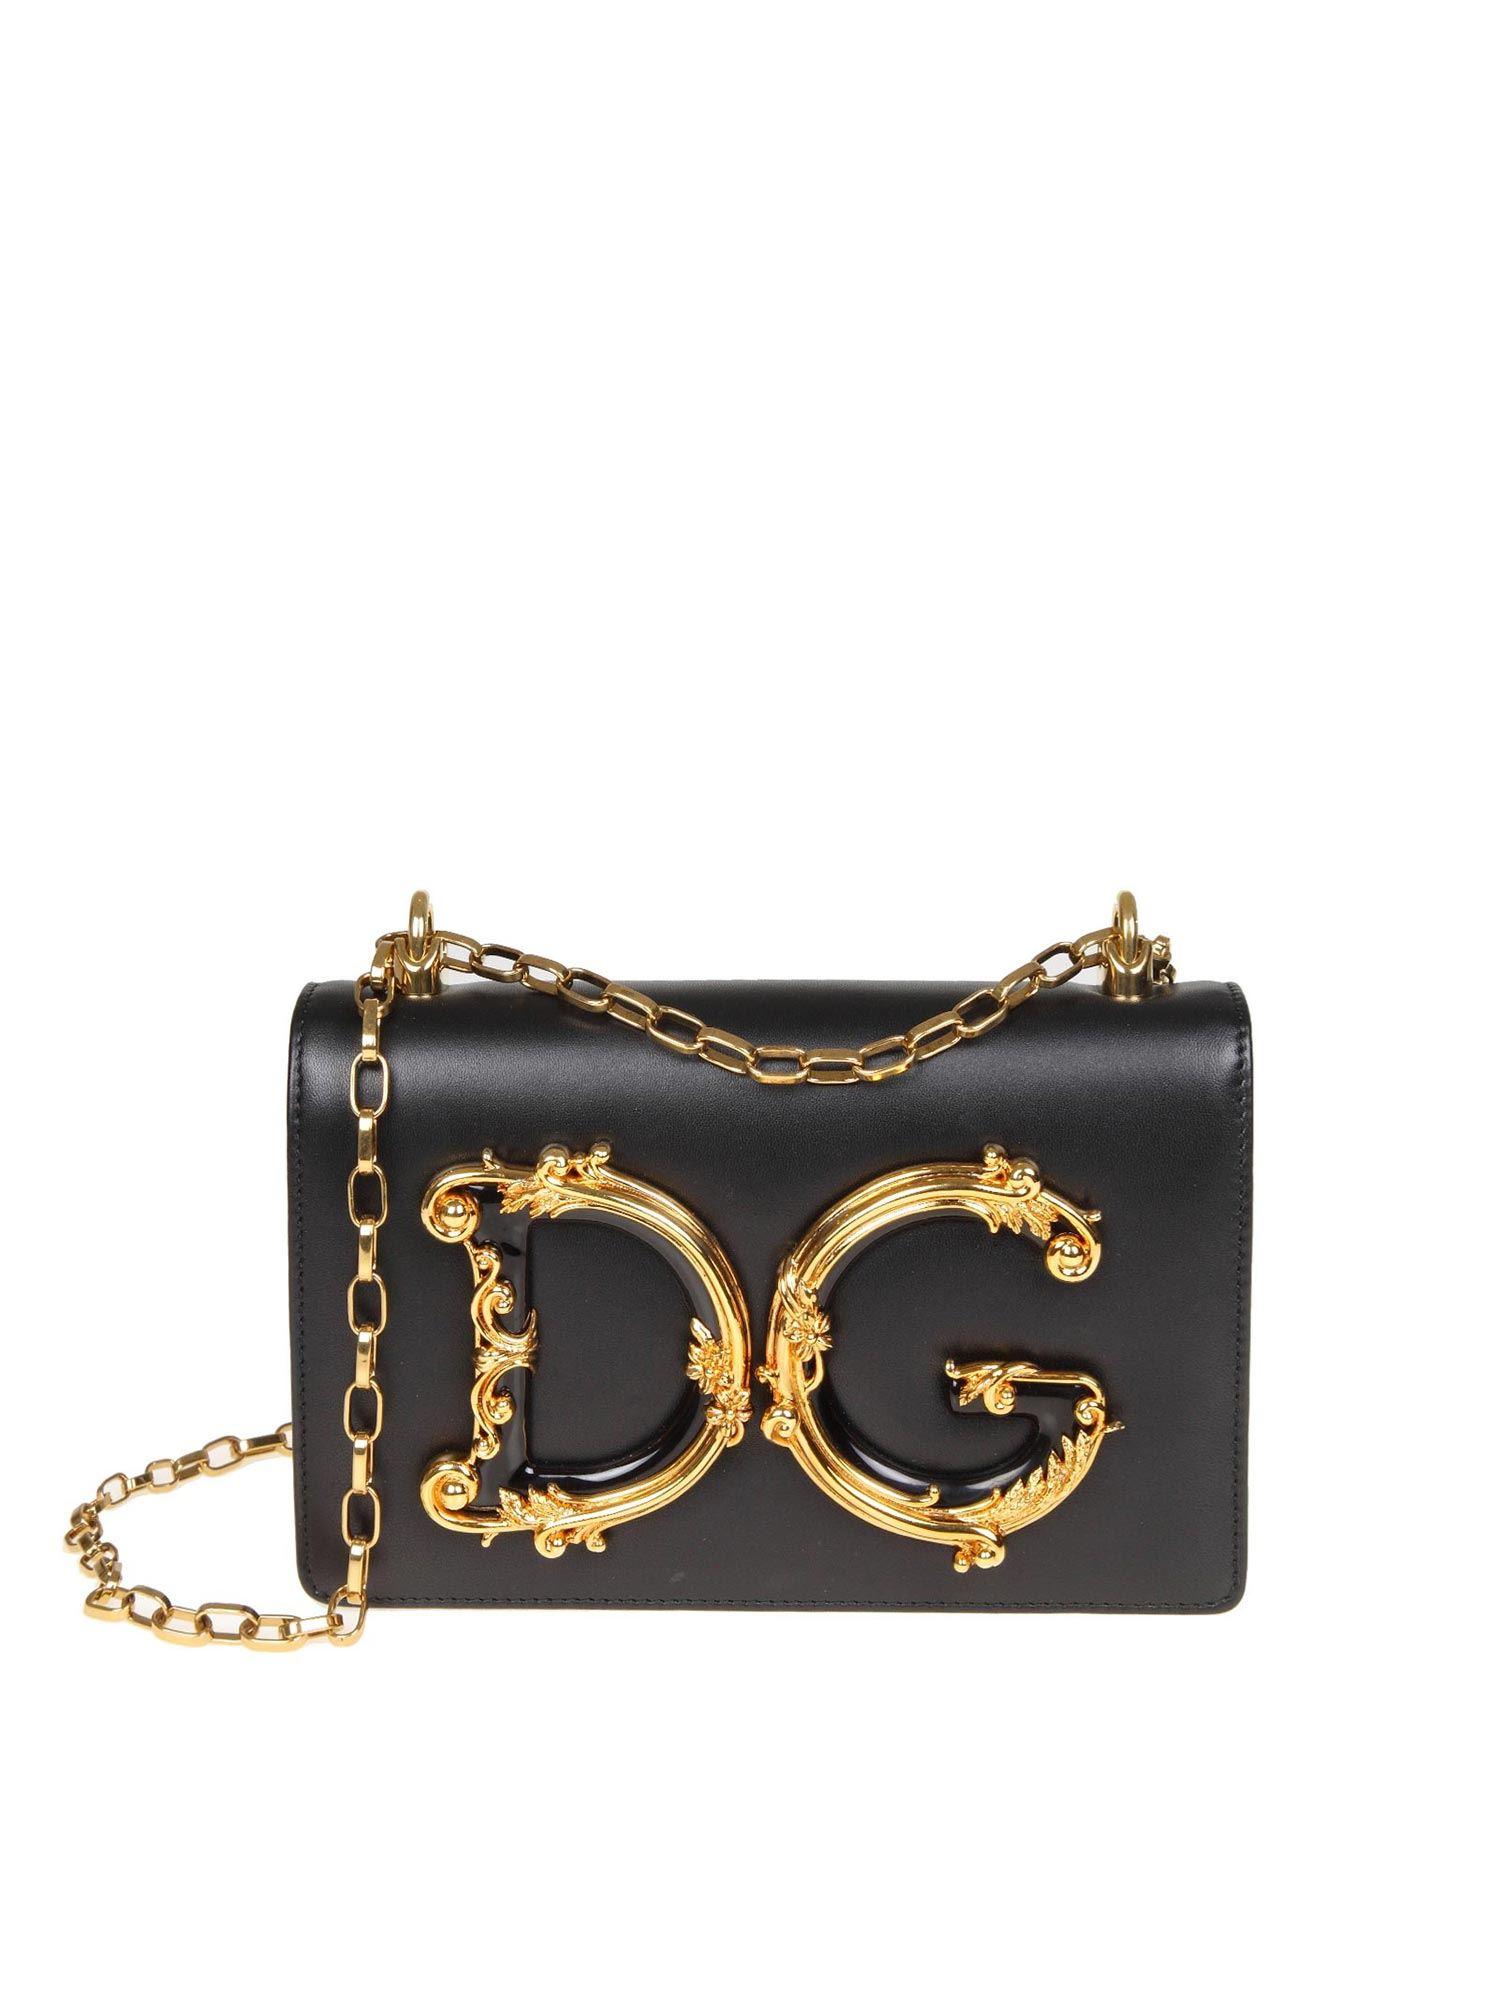 dolce and gabbana black handbag